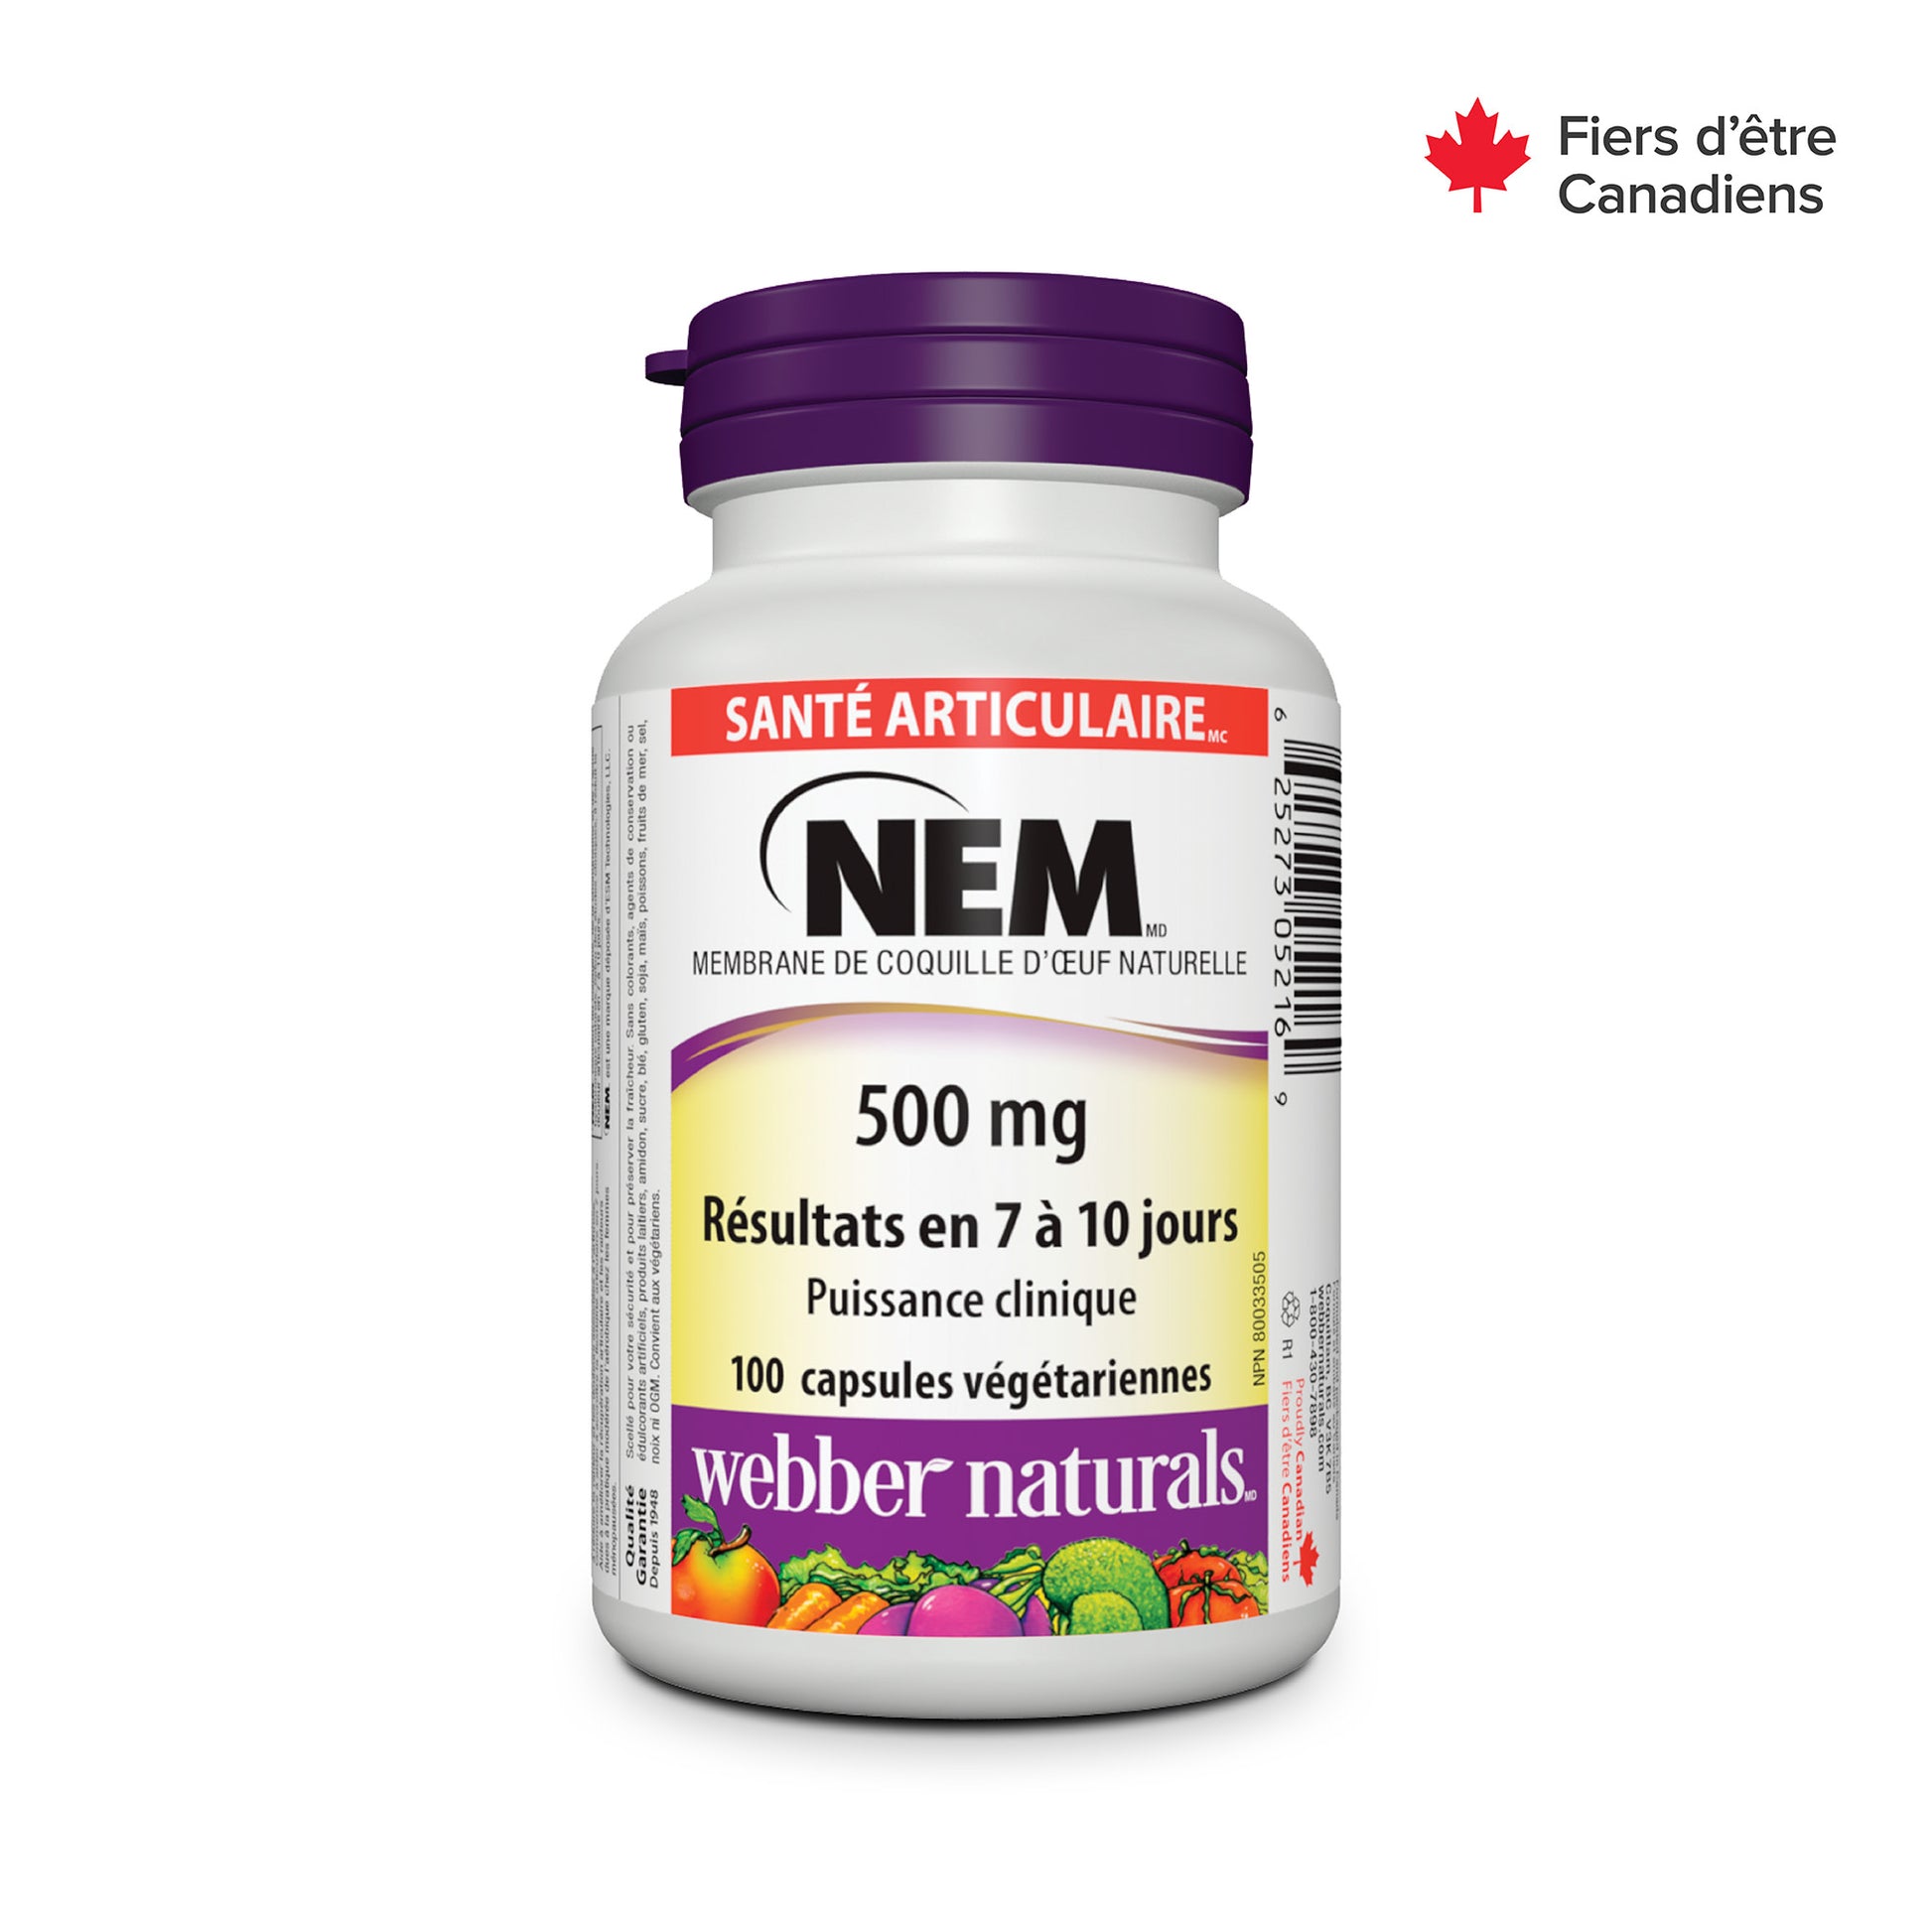 NEM 500 mg Vegetarian Capsules for Webber Naturals|v|hi-res|WN5216